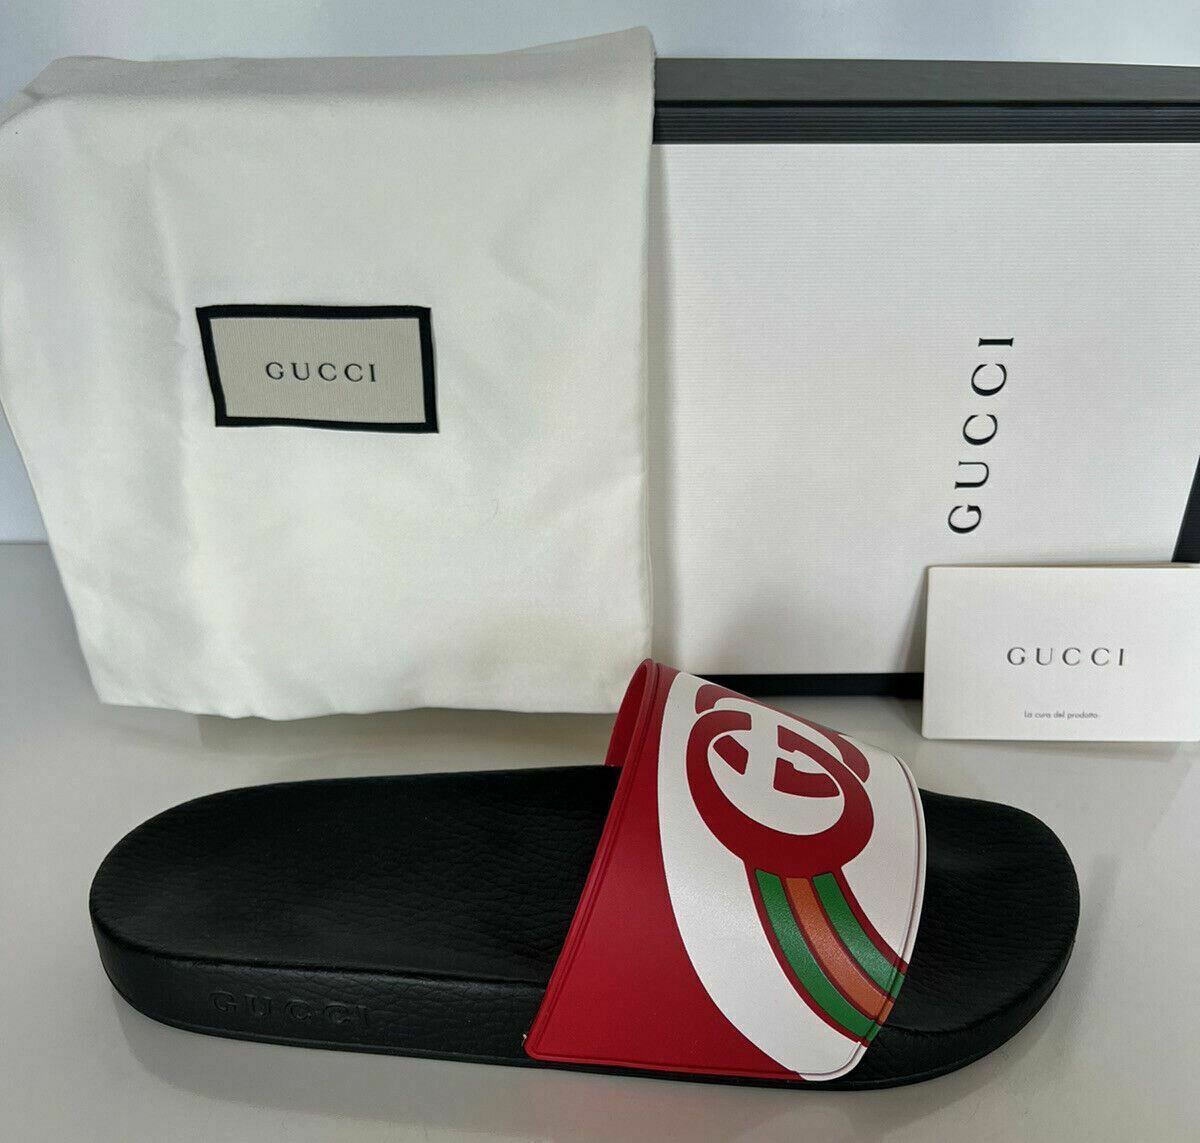 NIB Gucci Mens GG Rubber Rainbow Sandals 8.5 US (Gucci 8) Italy 548703